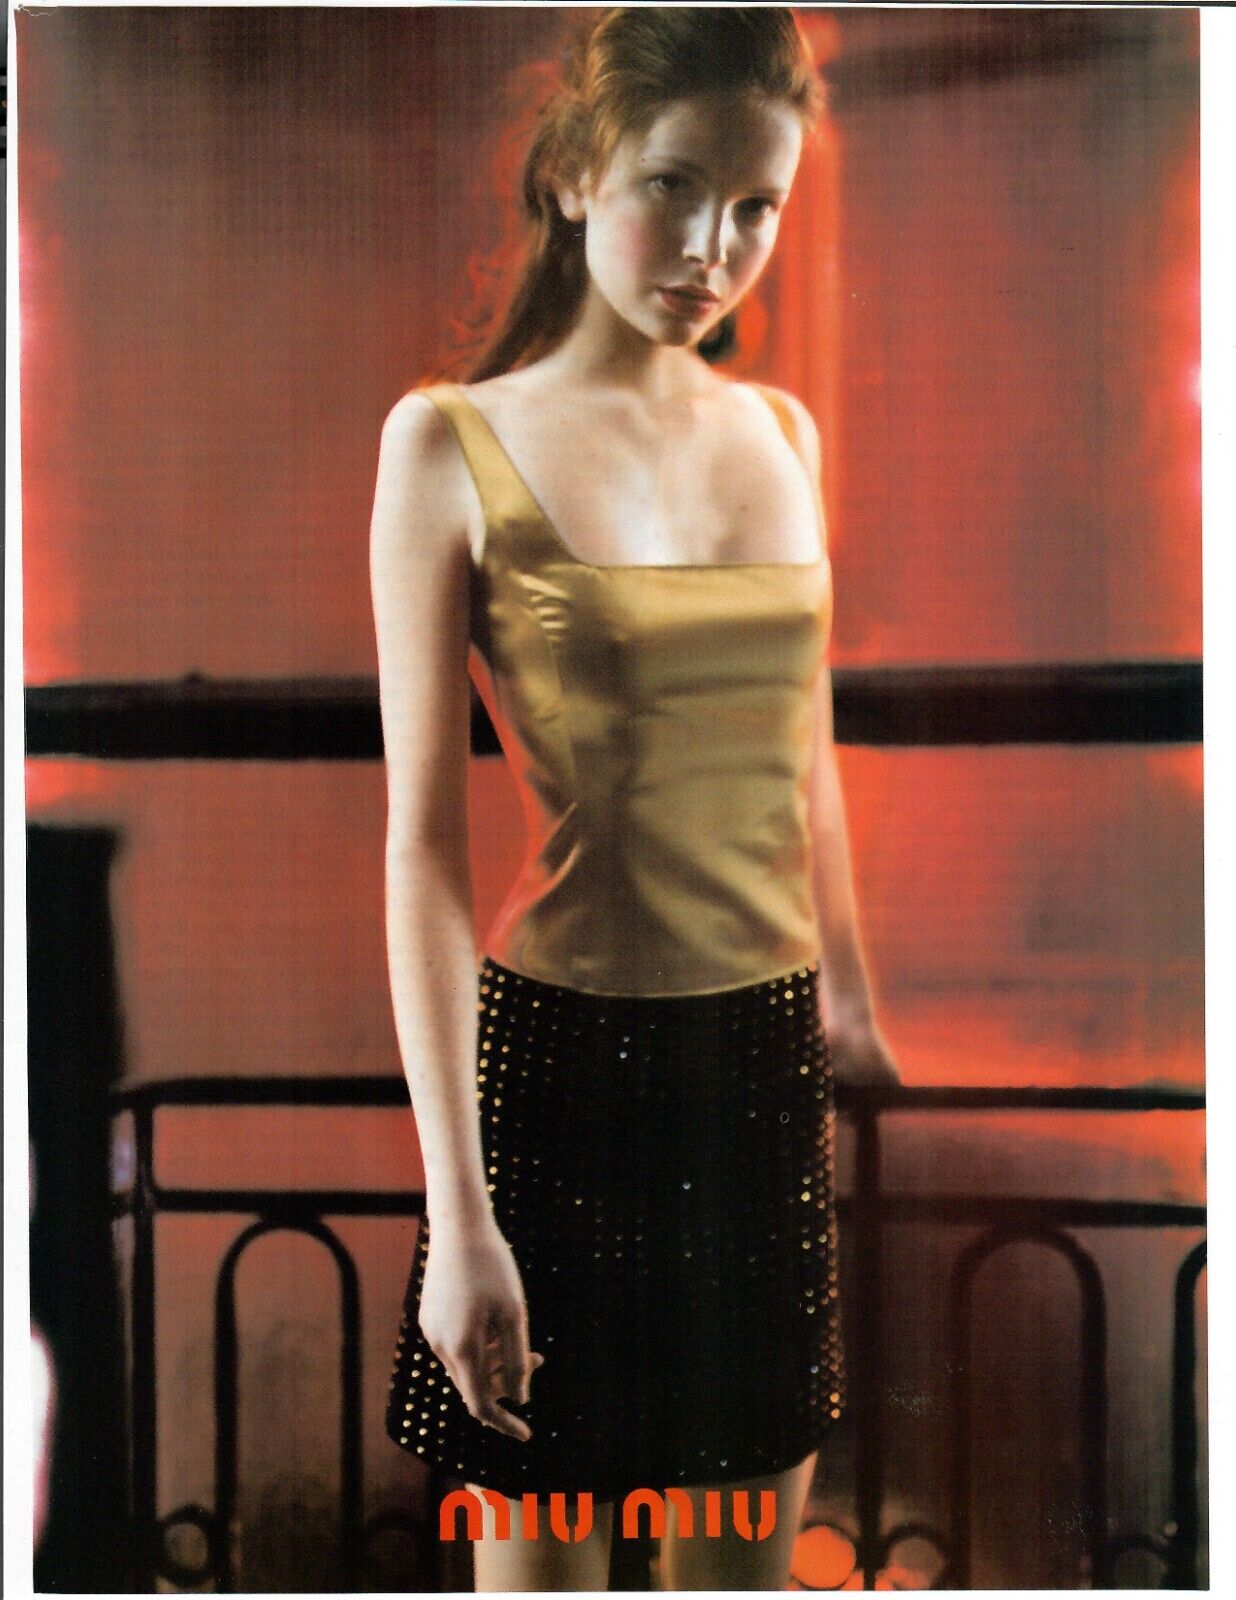 1998 Miu Miu Magazine Print Ad Women's Fashion Clothing Redhead In Sparkly Skirt